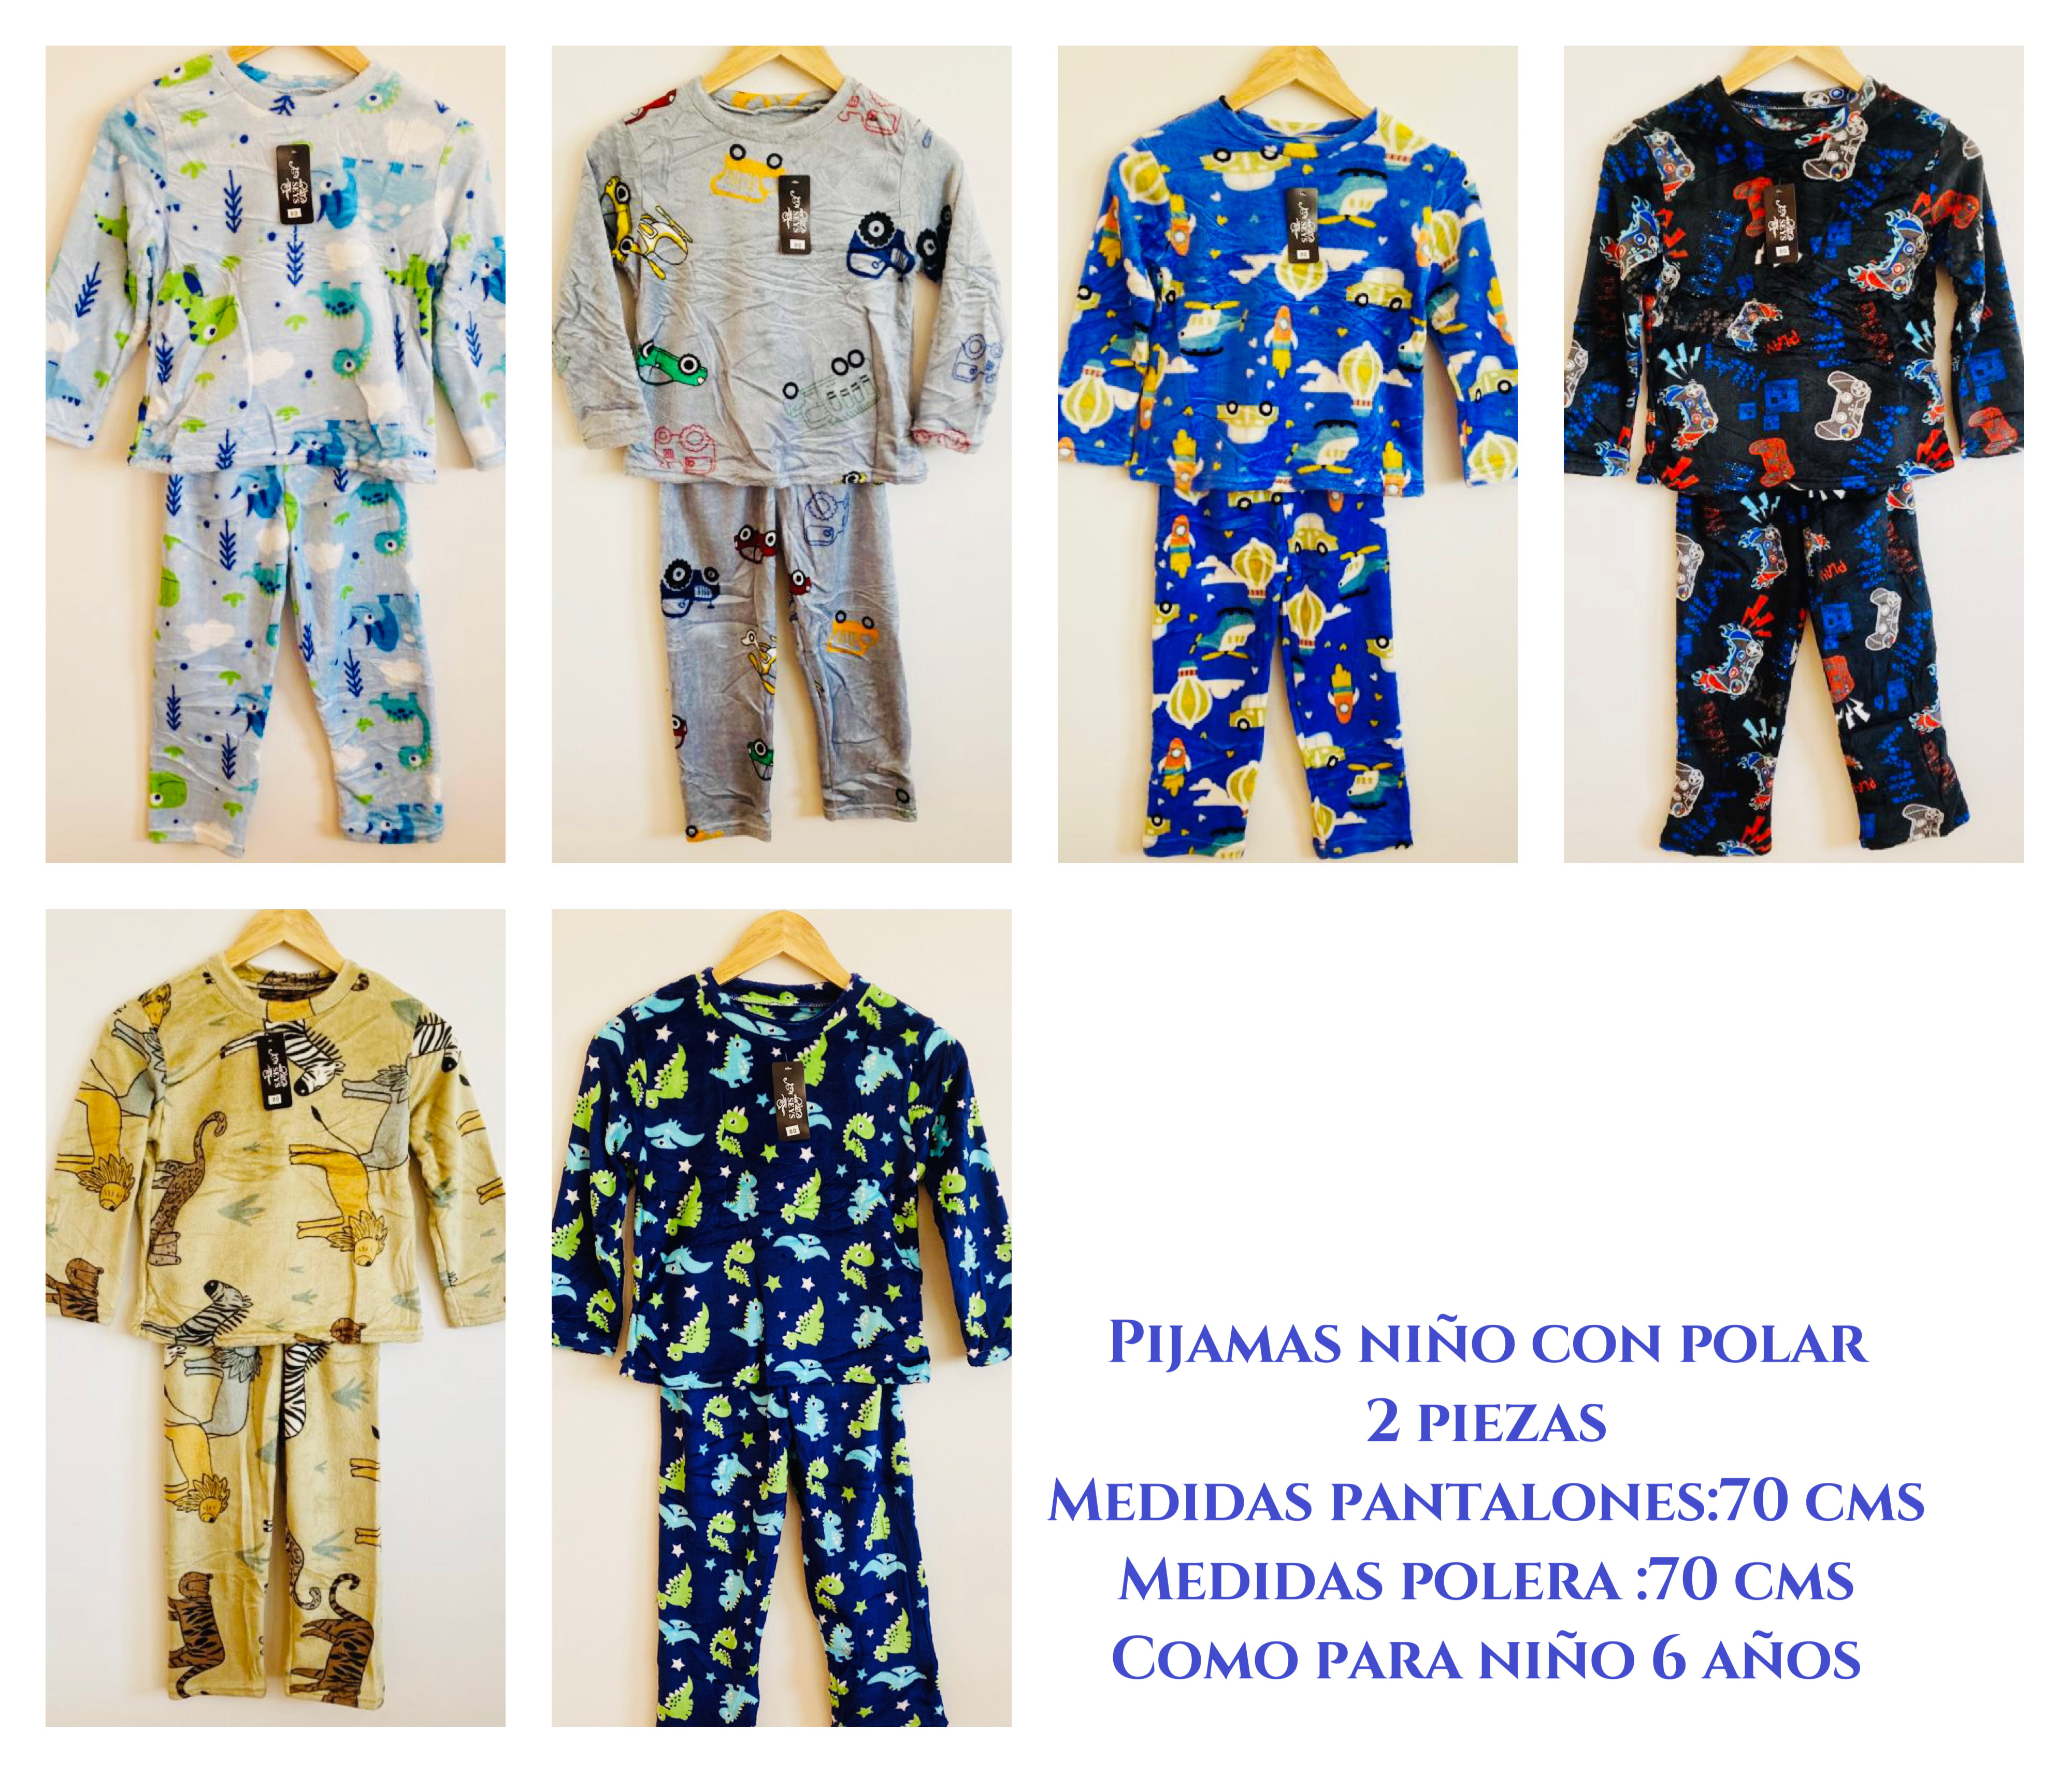 Pijamas niño con polar talla única como para 6 años .diseños